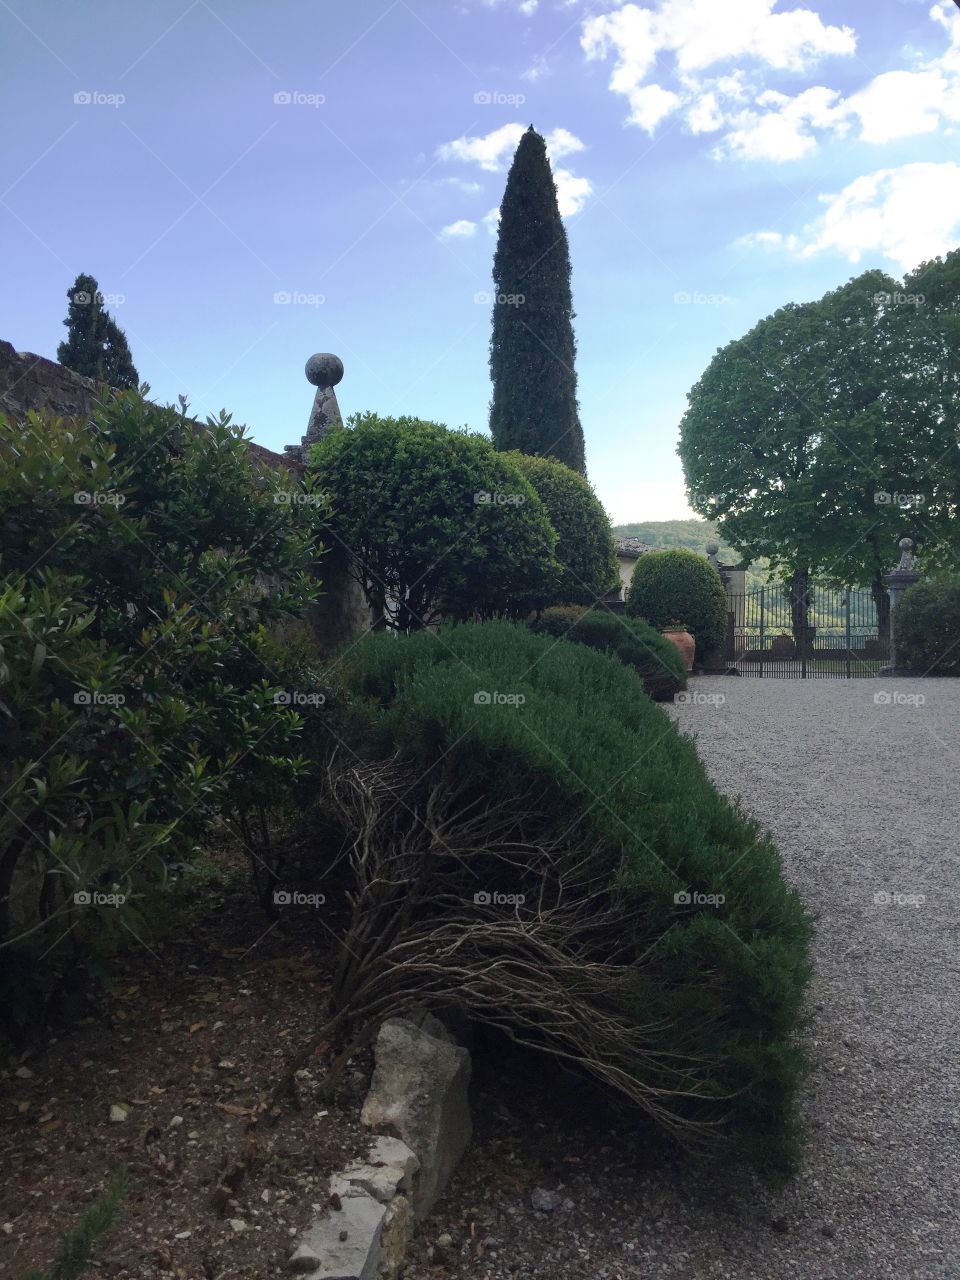 Strange plant - Tuscany - Italy